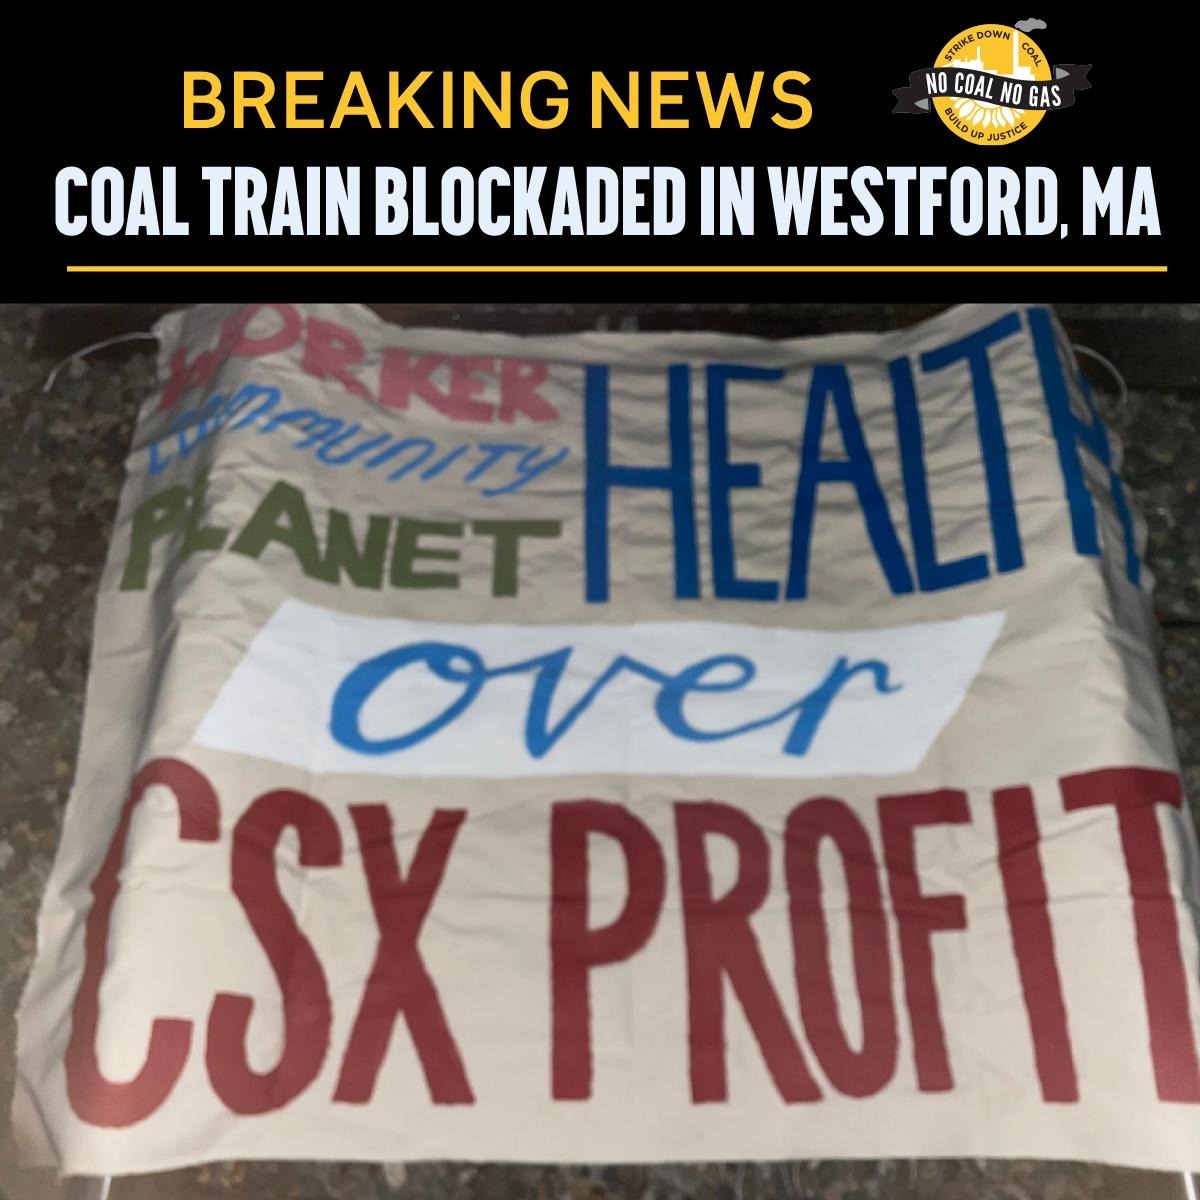 Coal Train blockaders call for: Worker, Community, & Planet Health over CSX Profit

#StrikeDownCoal #BuildUpJustice
Solidarity with #RailLabor #RailroadWorkers #UnionStrong